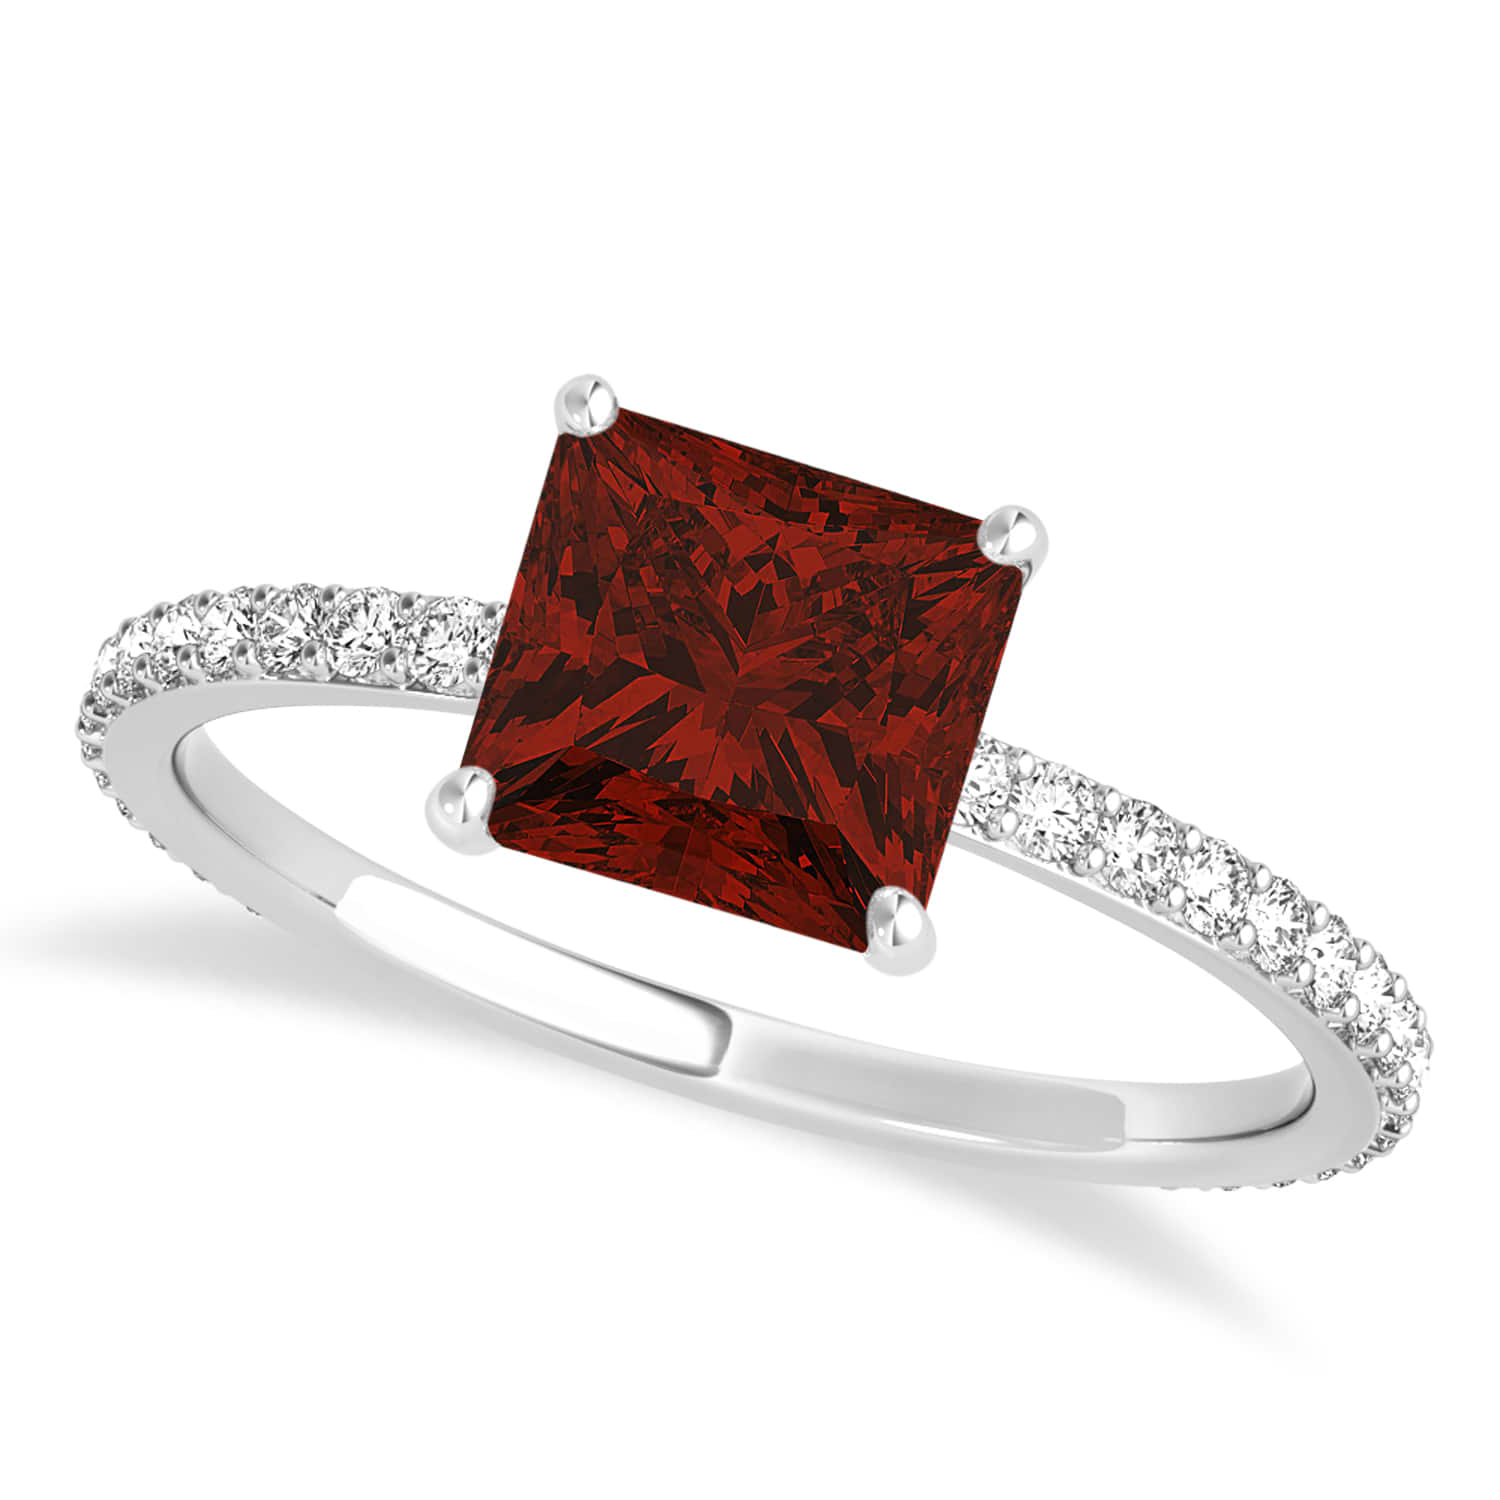 Princess Garnet & Diamond Hidden Halo Engagement Ring 14k White Gold (0.89ct)